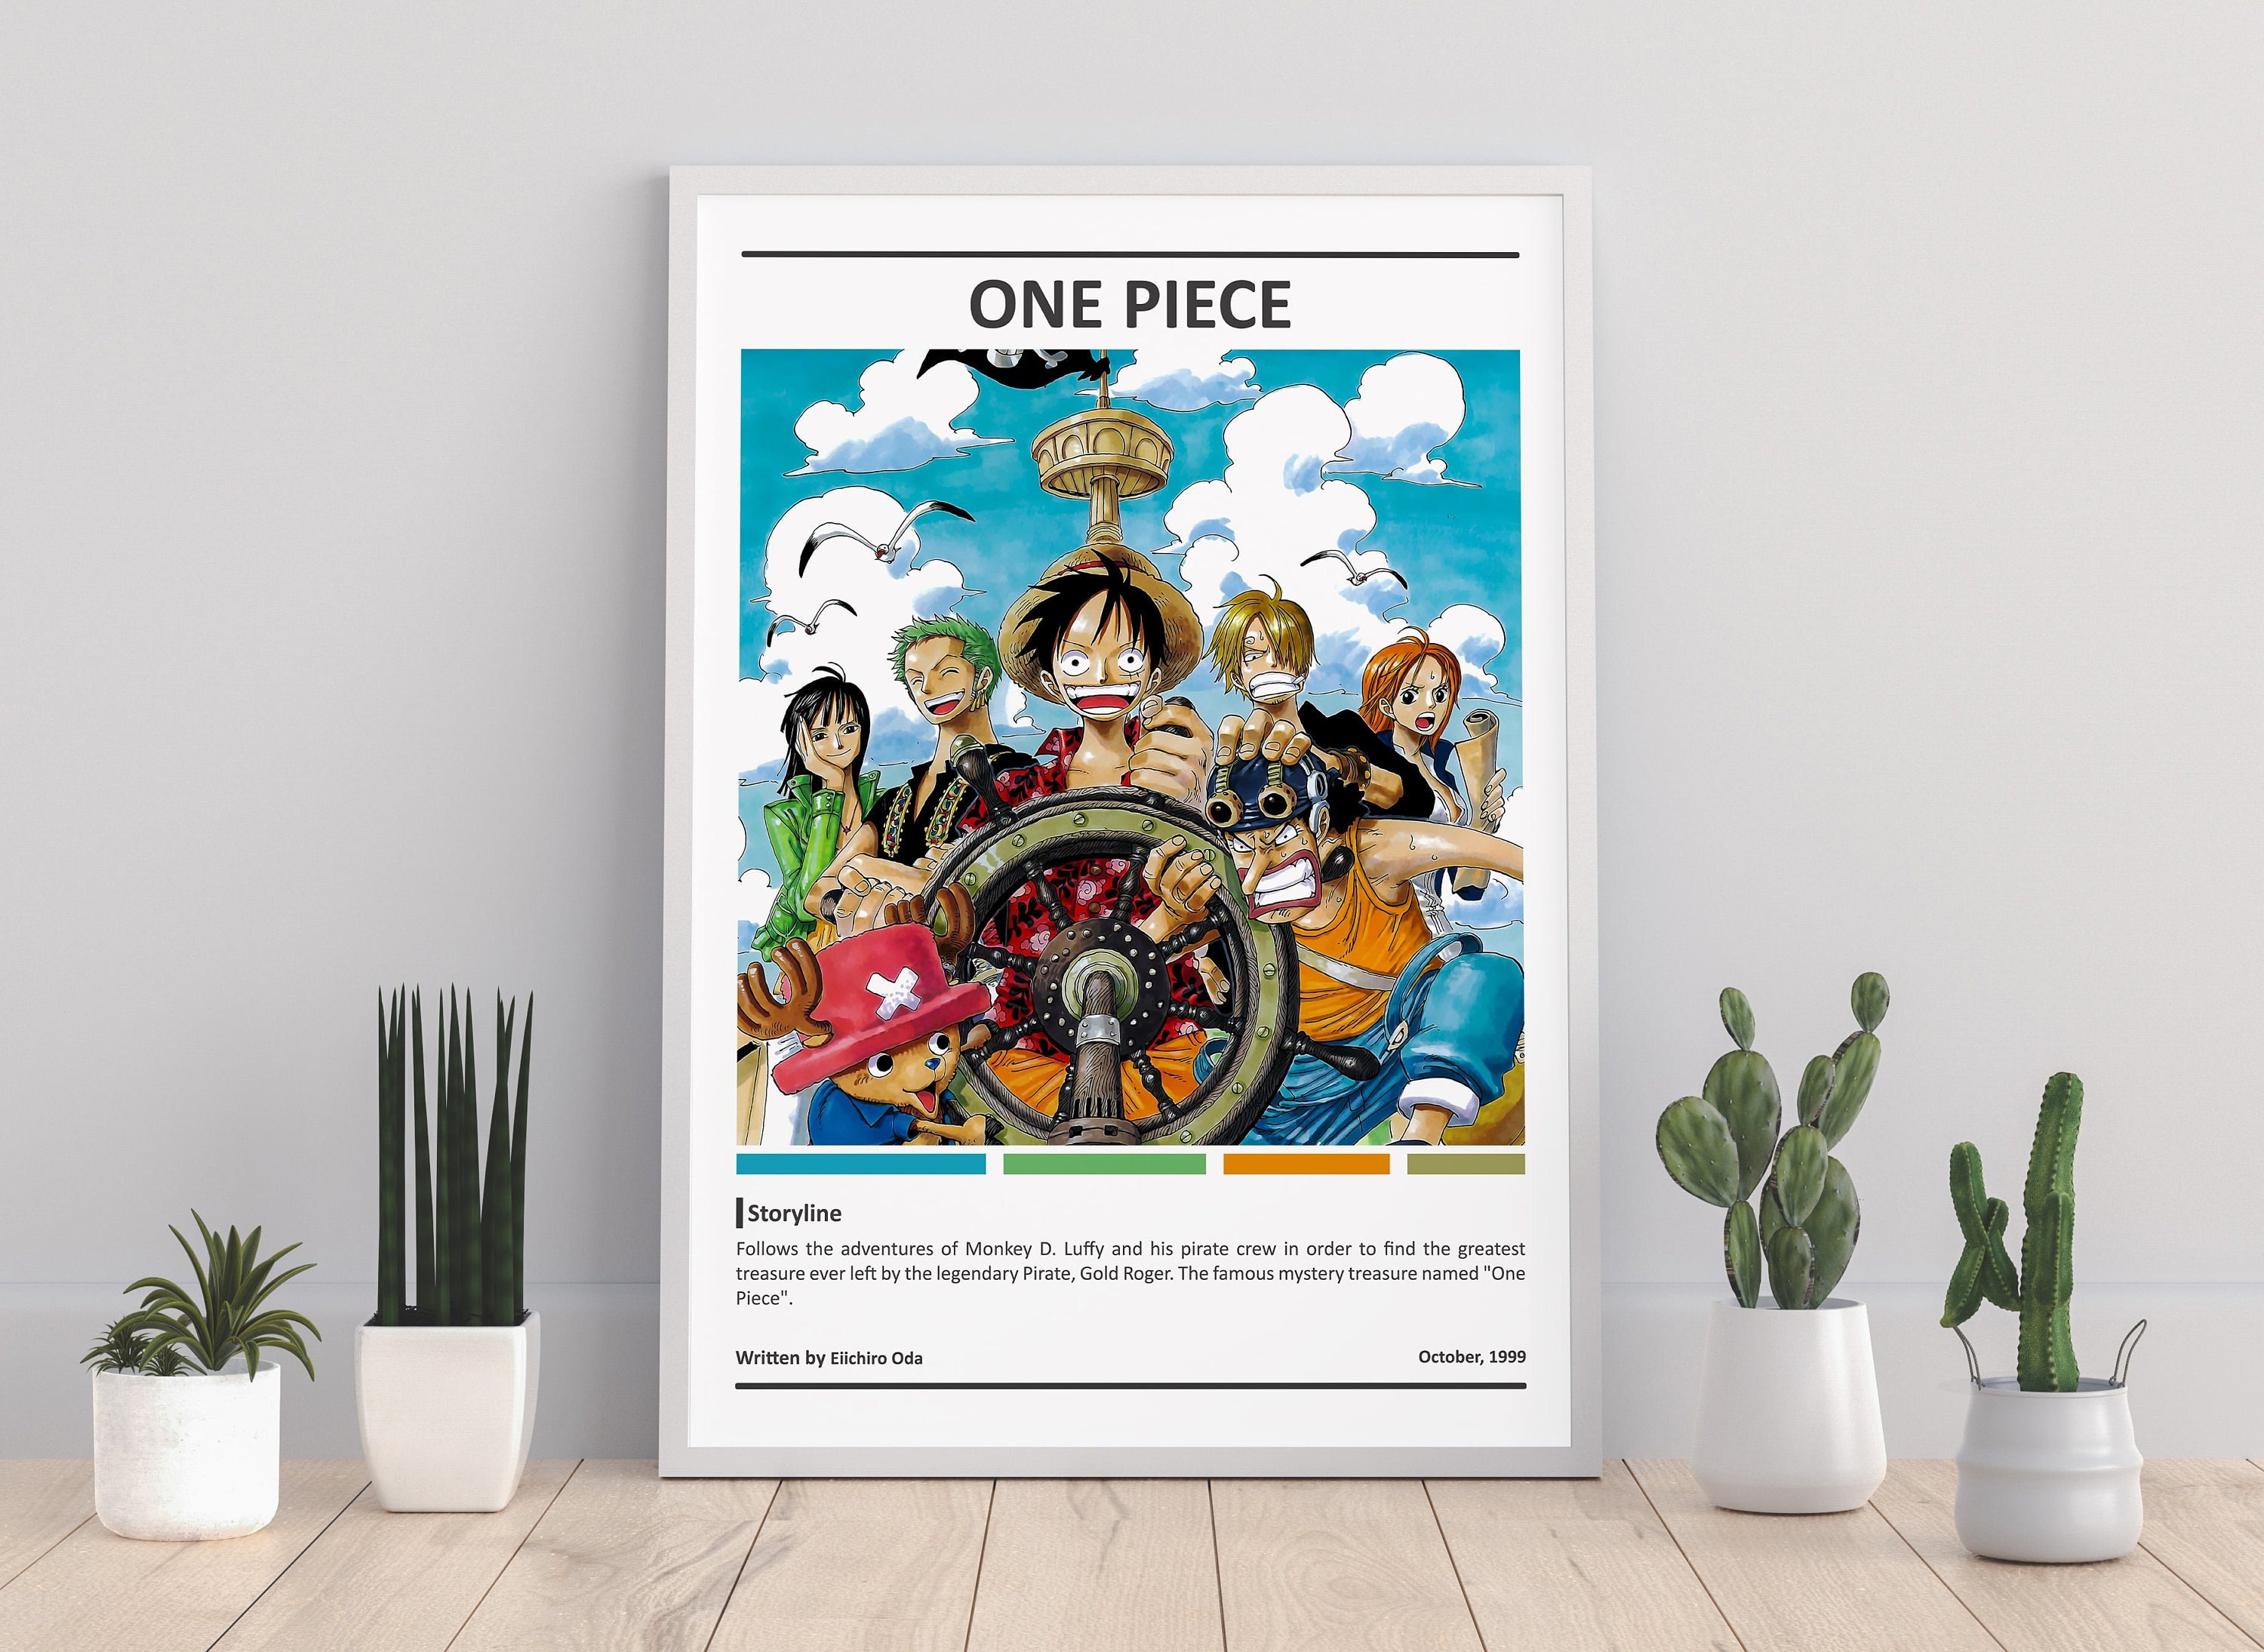 One Piece Film Collection (Movie 1-15 + 3 OVA + 13 Special) ~ All Region ~  DVD ~